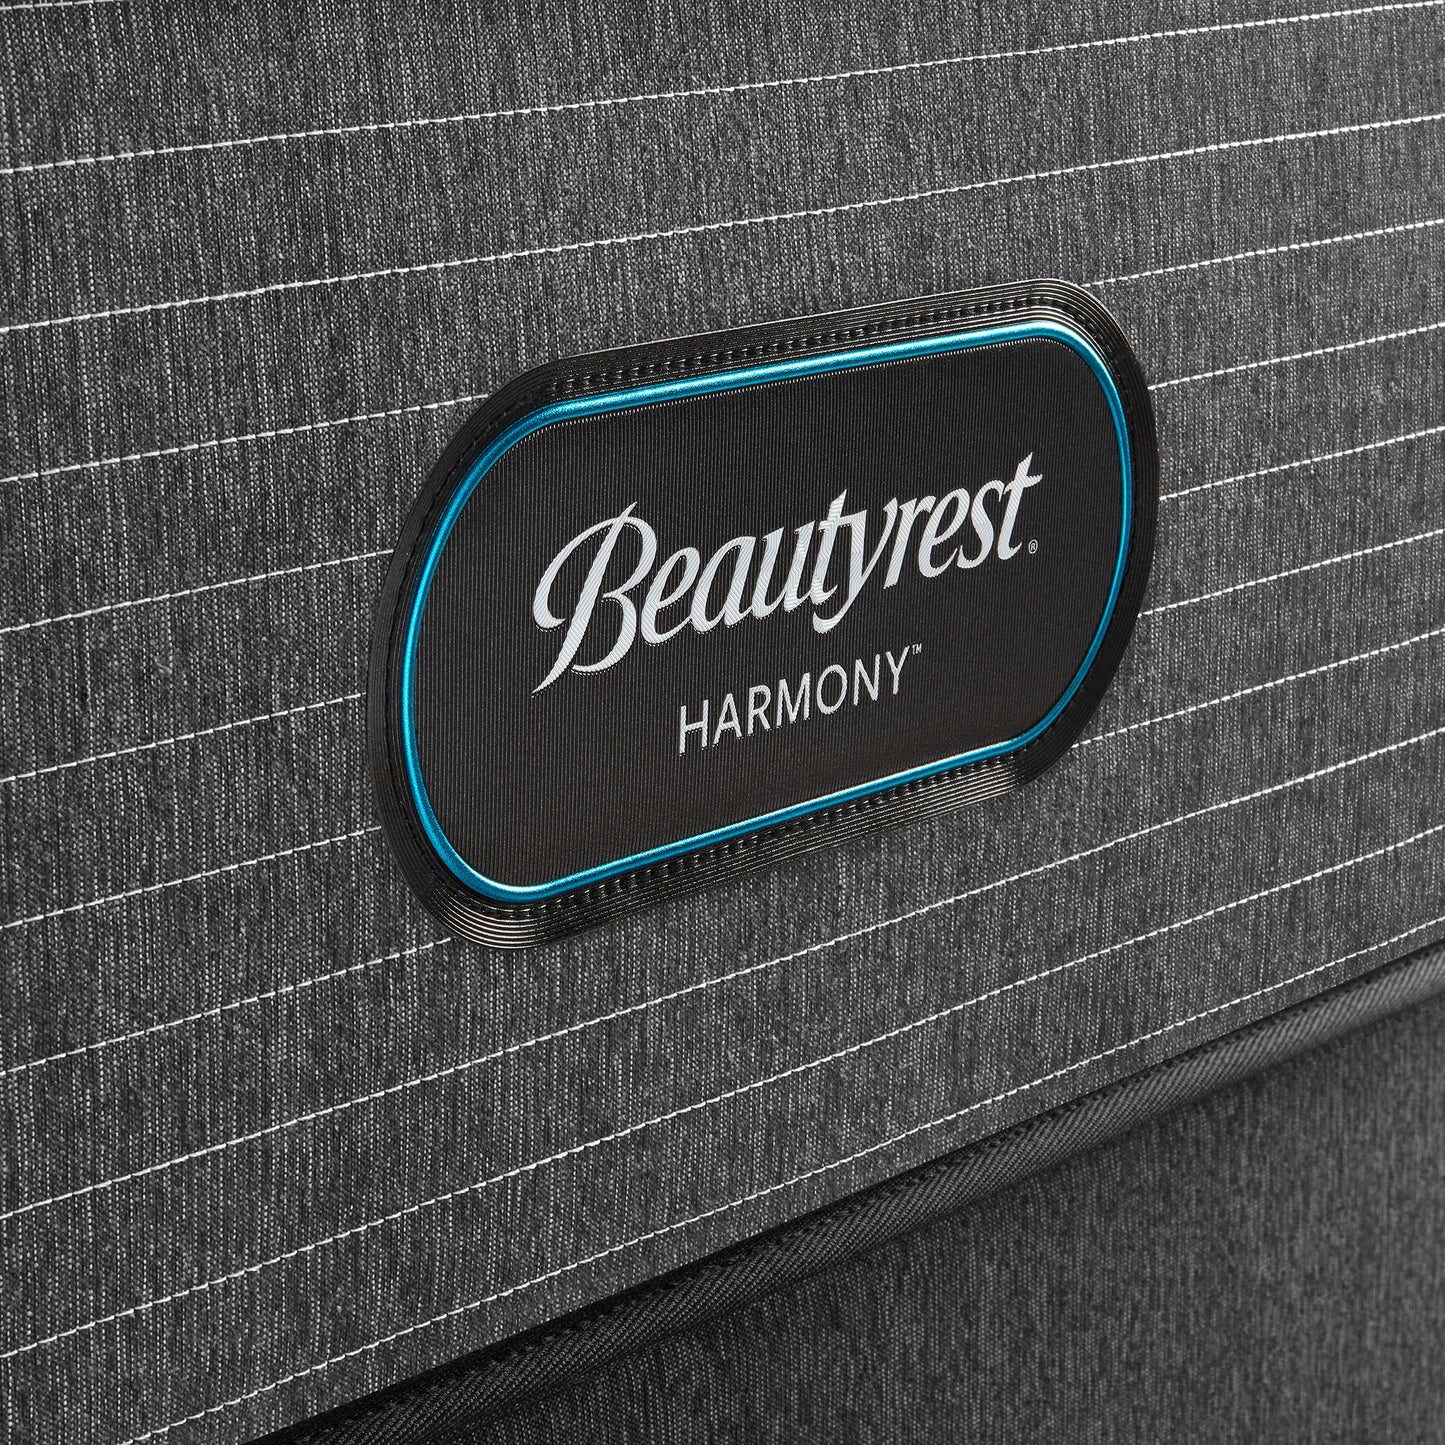 Beautyrest- Harmony- Emerald Bay Medium